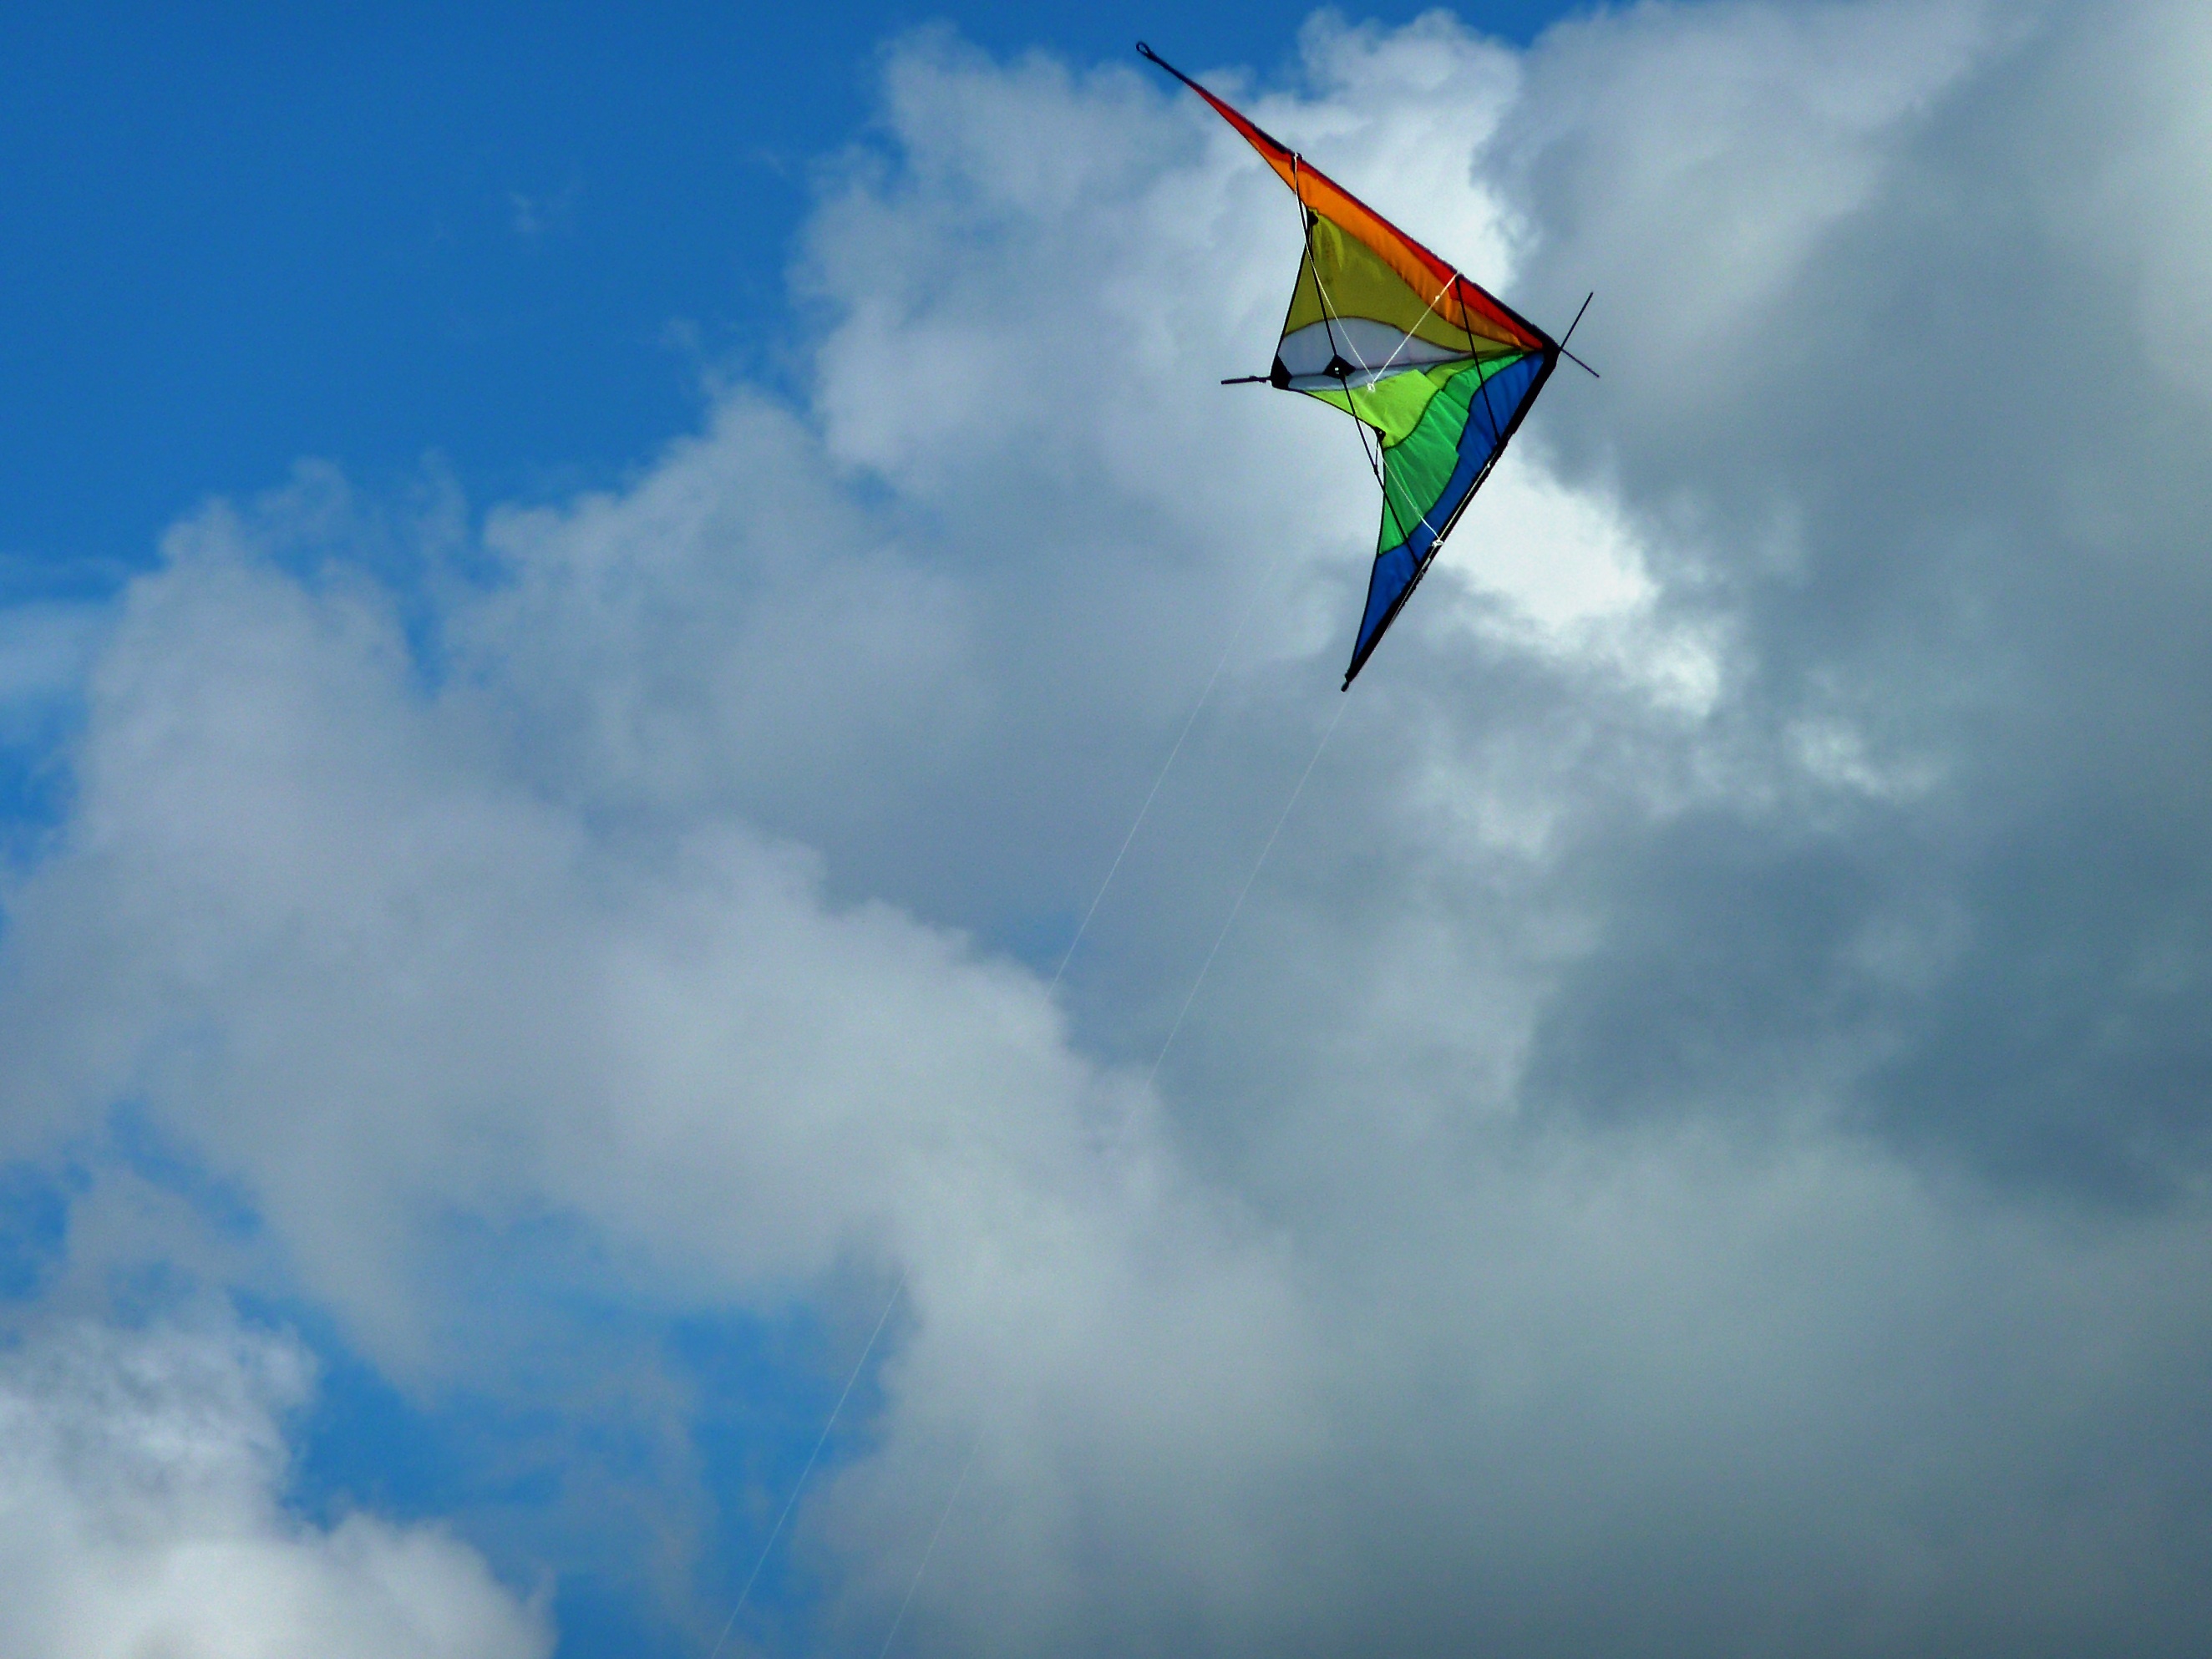 Kite Sports: Cloud, Sky, Kite sports, The modern single line delta kite, An eye-catching spectacle. 2650x1990 HD Wallpaper.